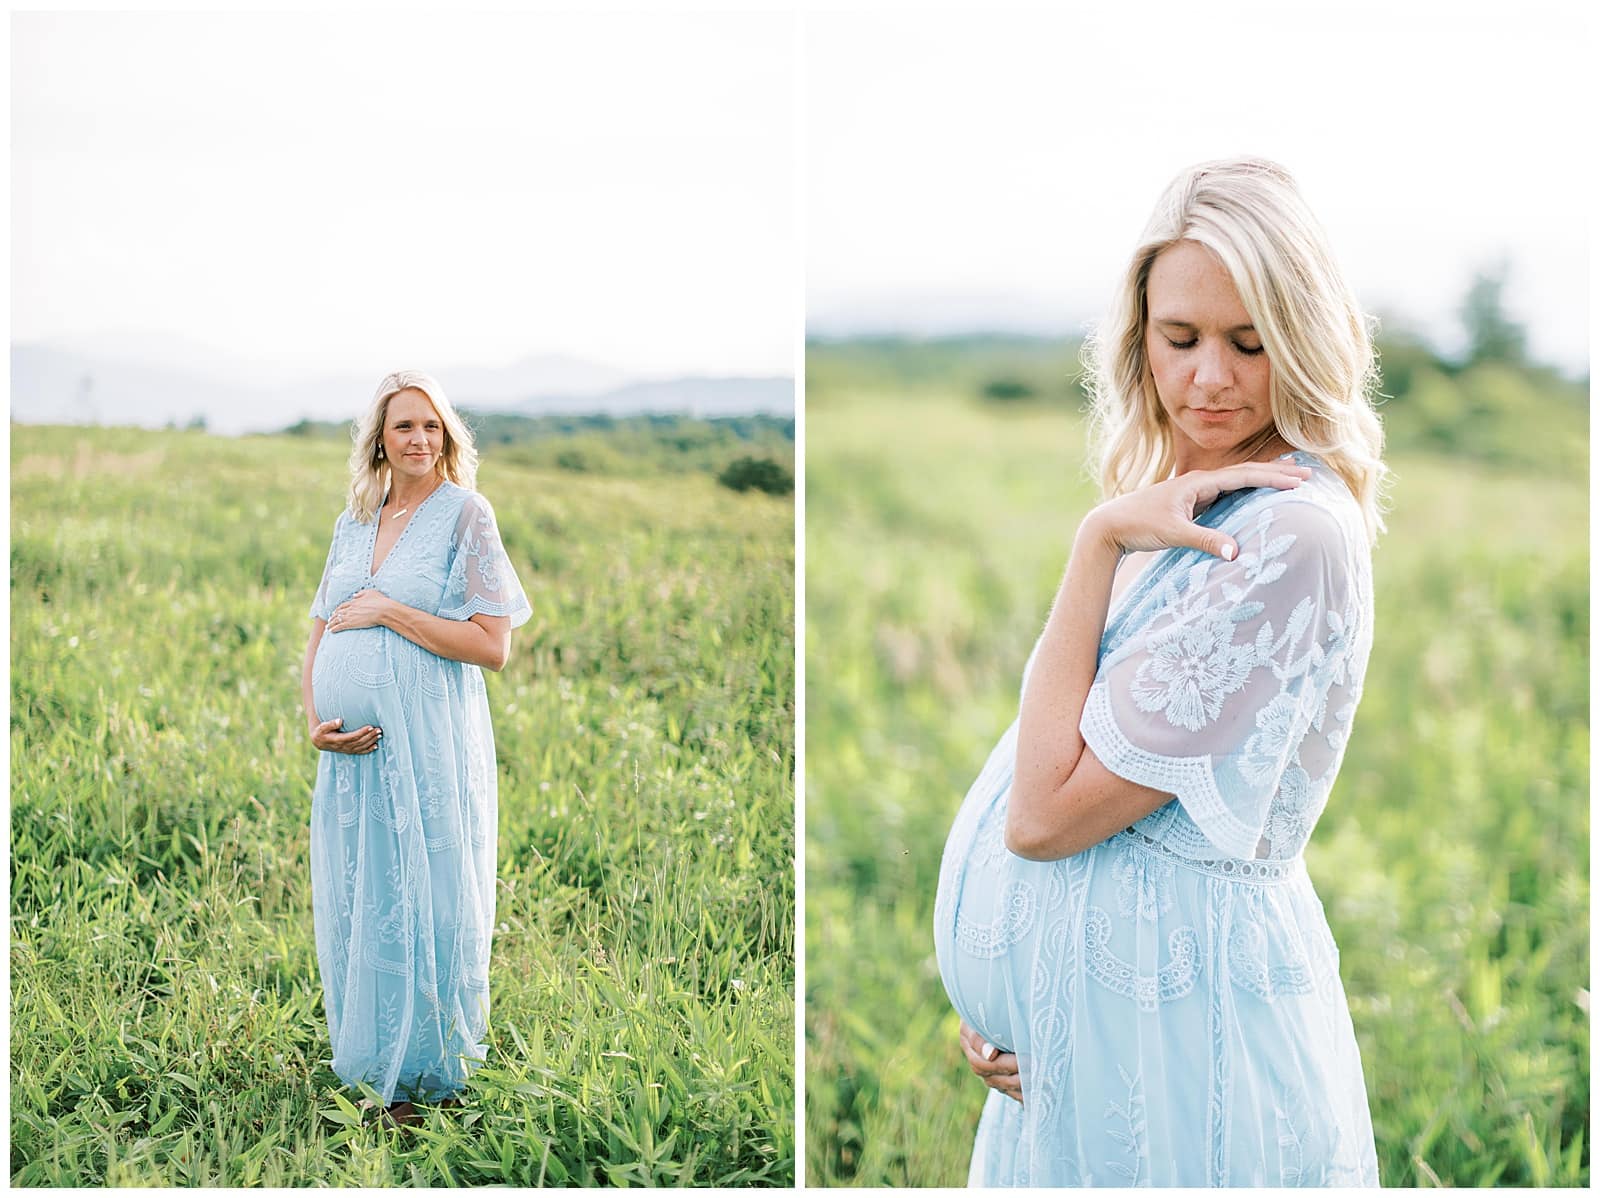 Danielle-Defayette-Photography-The-Beauty-Spot-Maternity-Photos-2020_0009.jpg